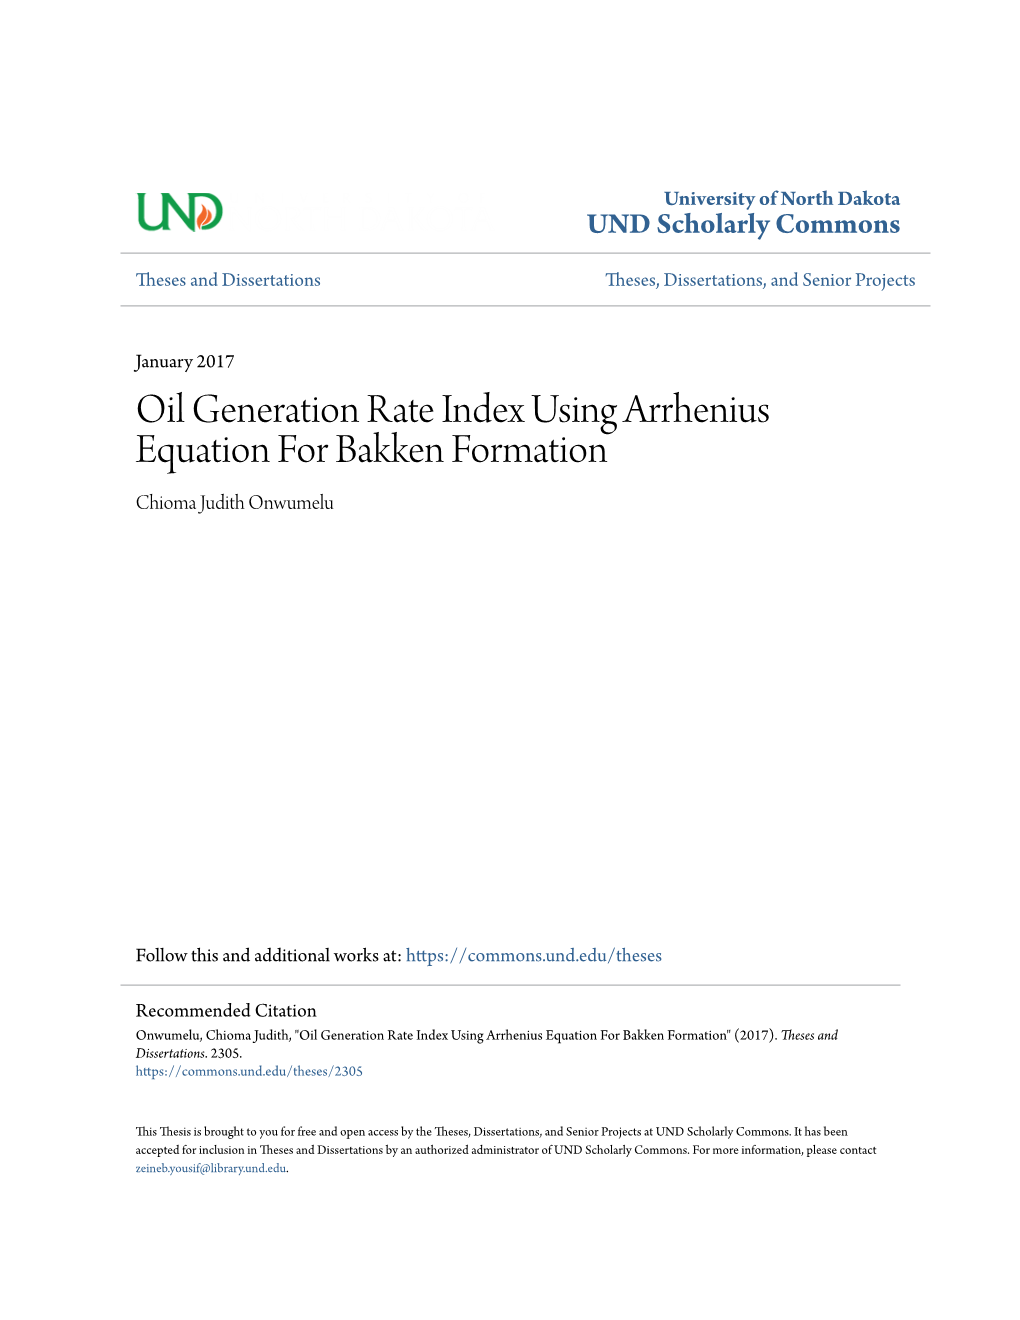 Oil Generation Rate Index Using Arrhenius Equation for Bakken Formation Chioma Judith Onwumelu